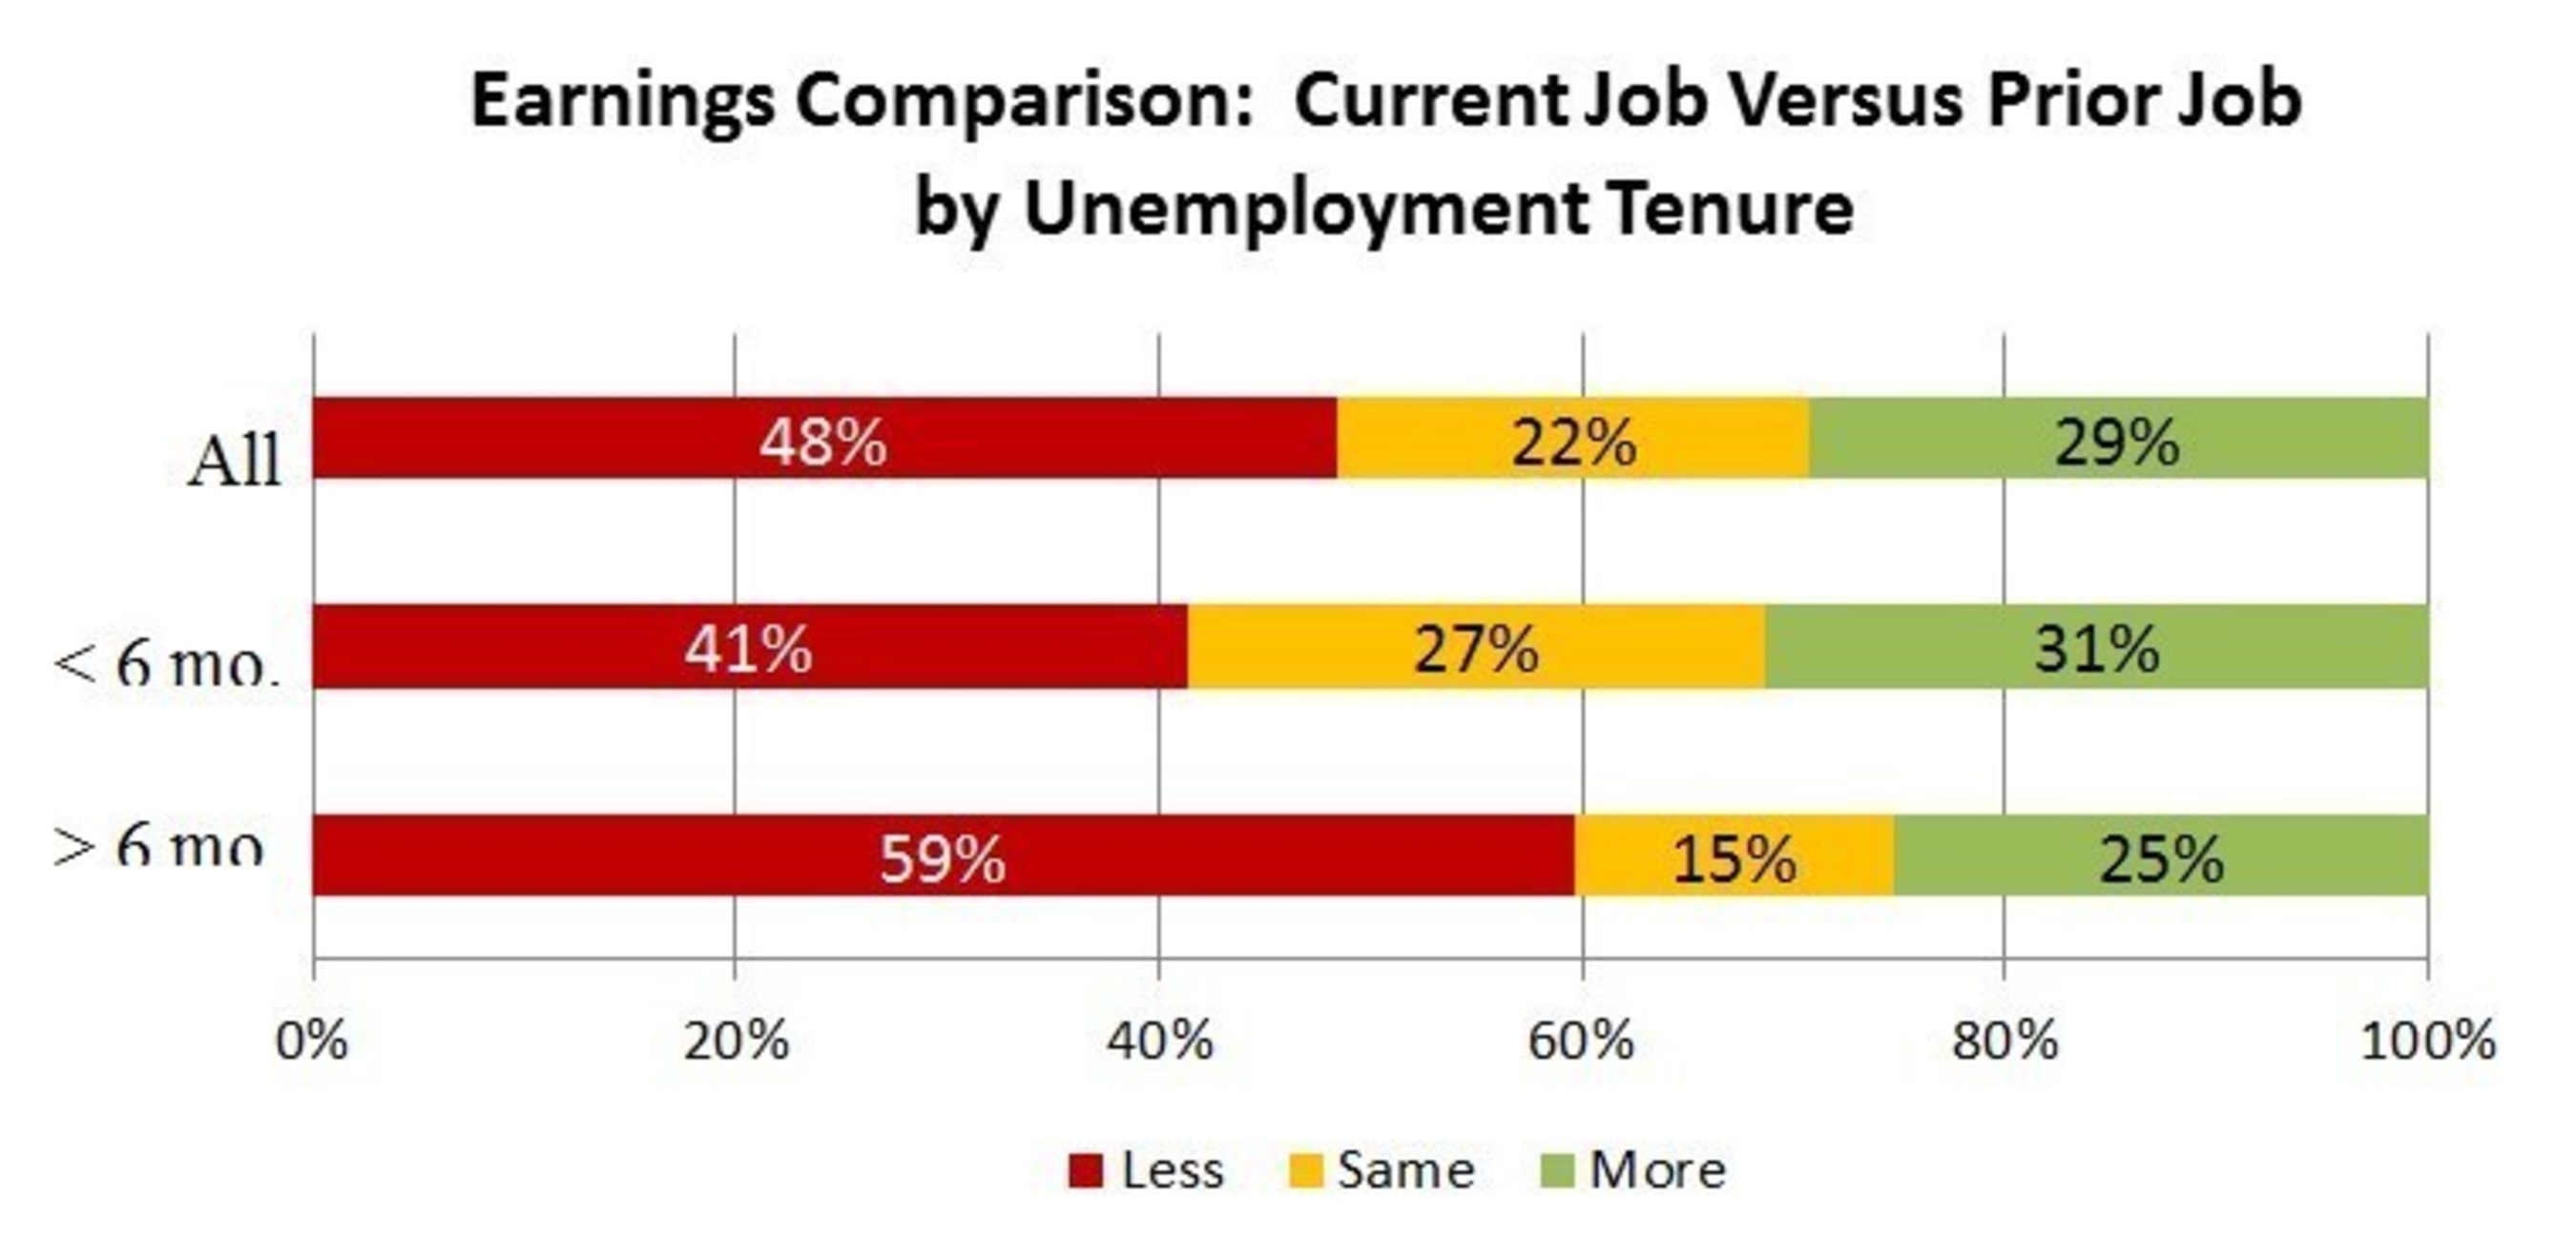 Earnings Comparison: Current Job Versus Prior Job by Unemployment Tenure